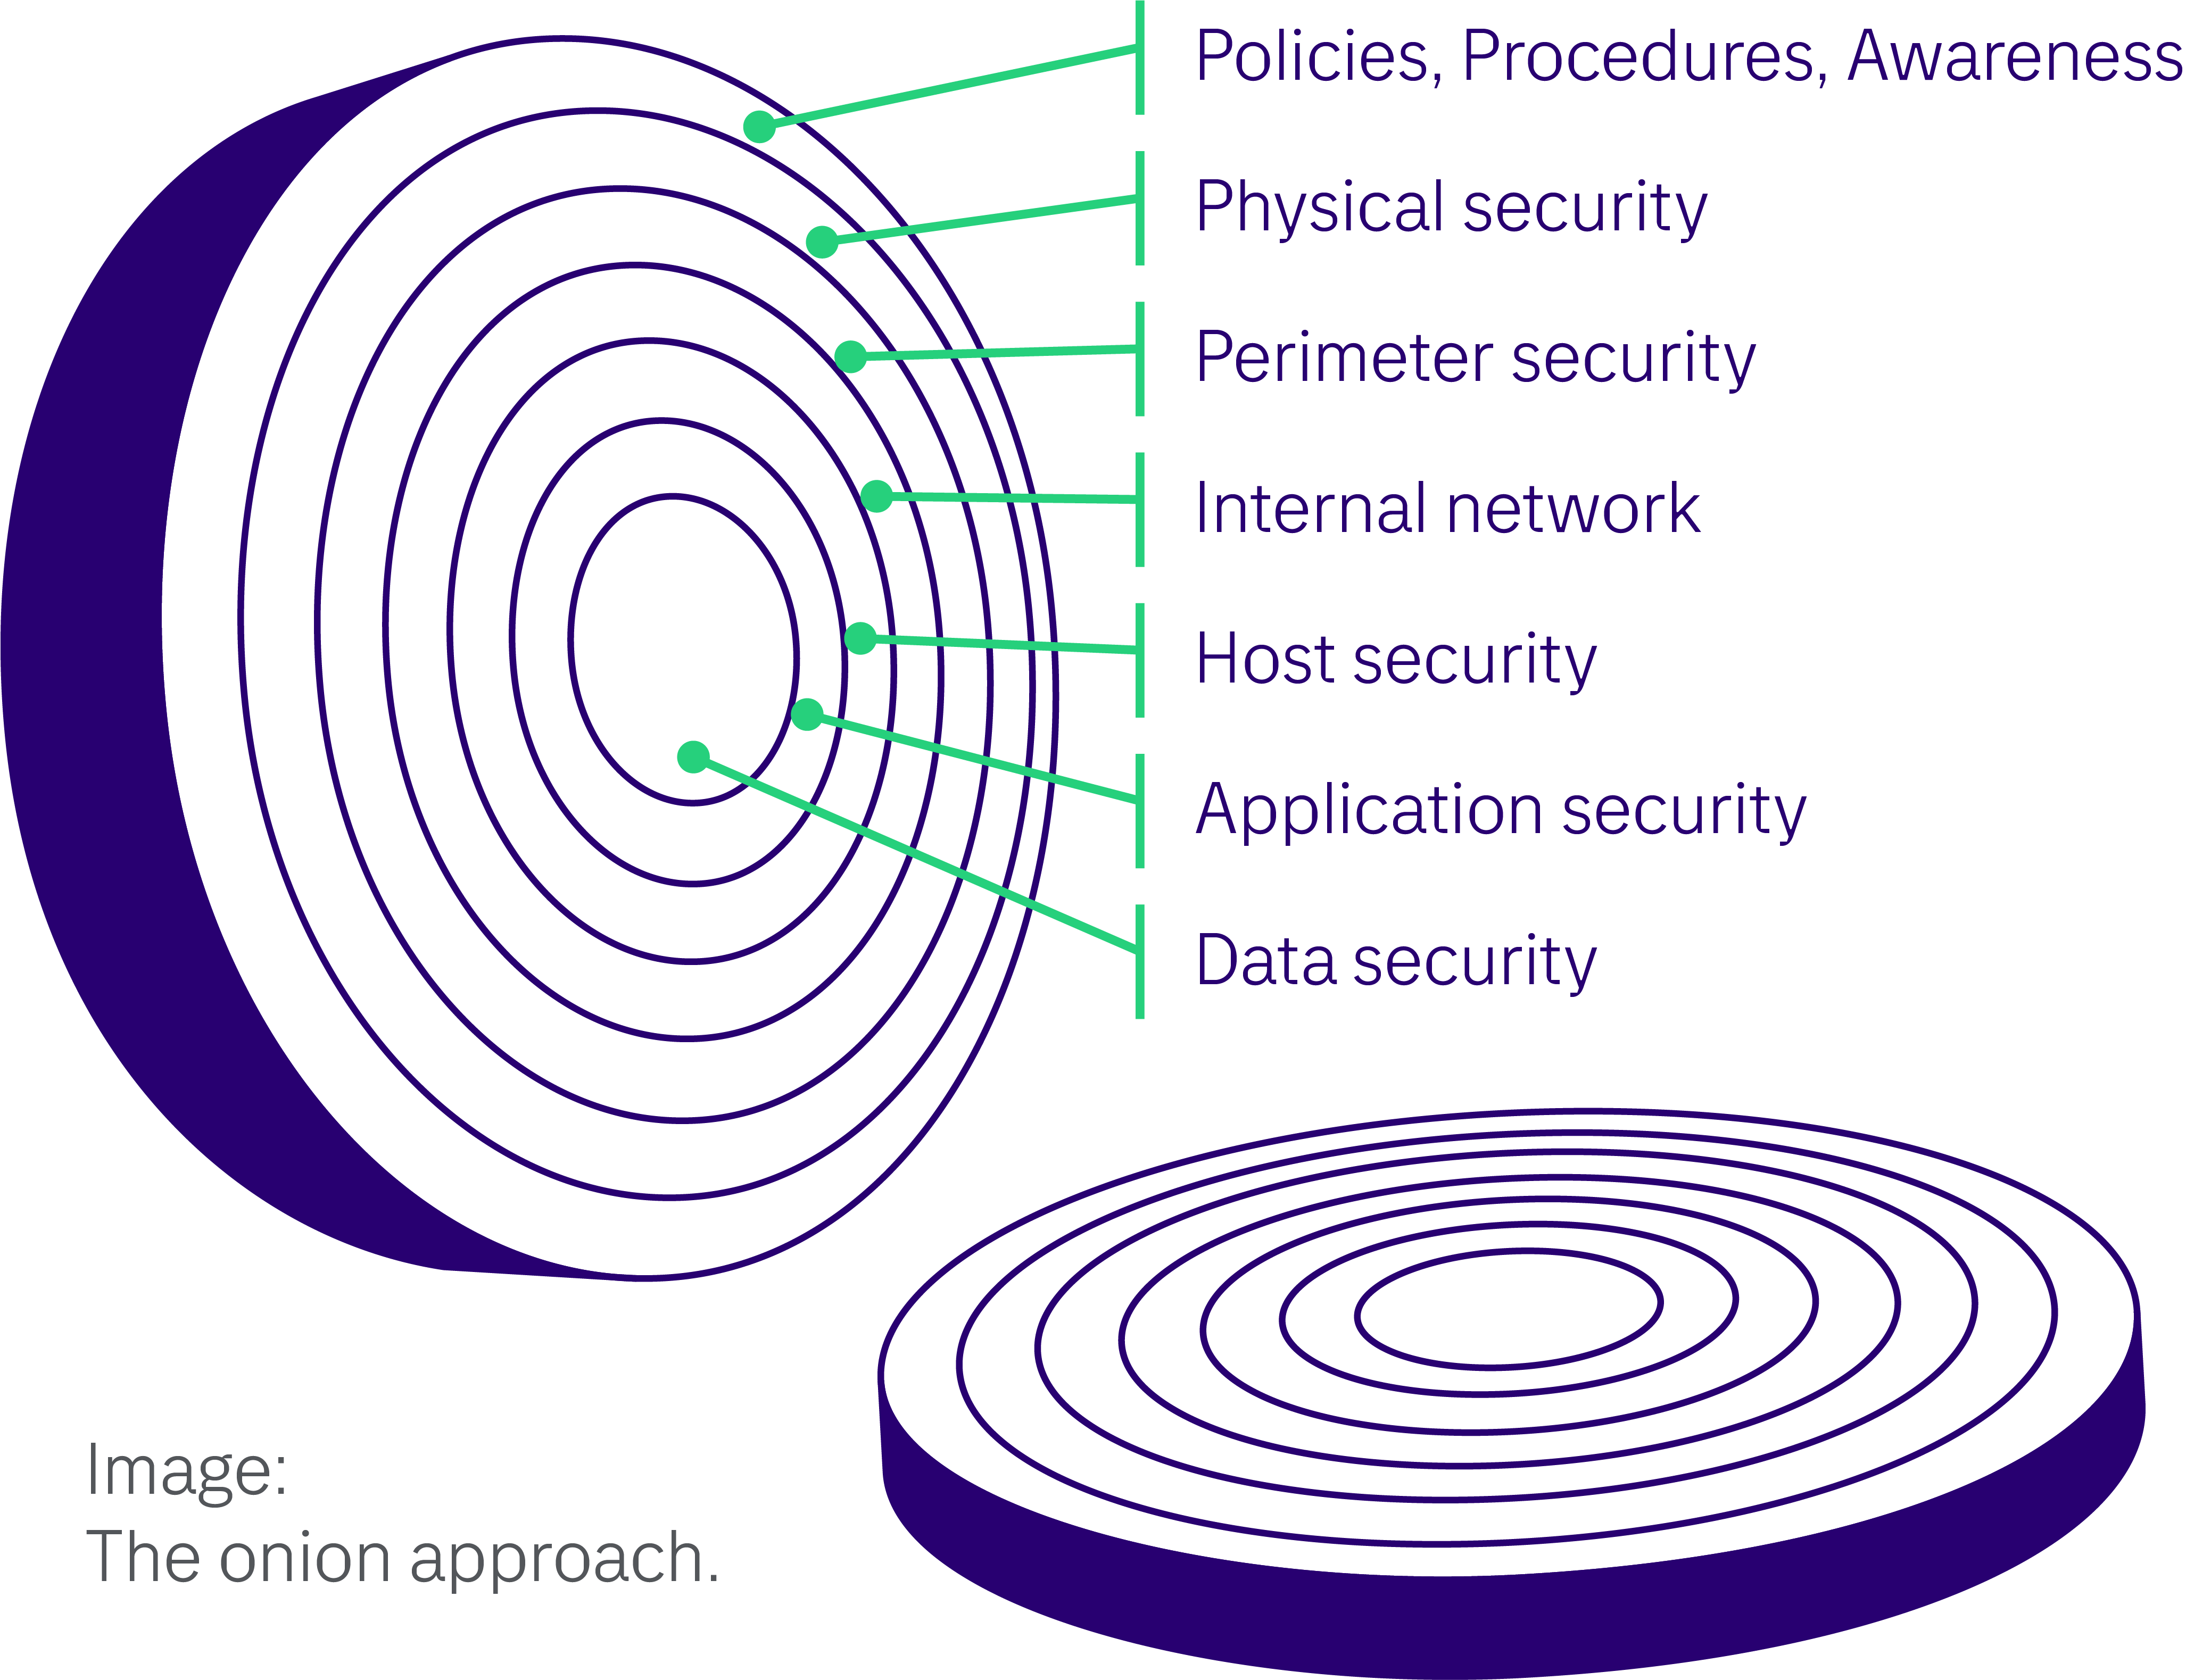 Cybersecurity awareness: Onion chart of cybersecurity